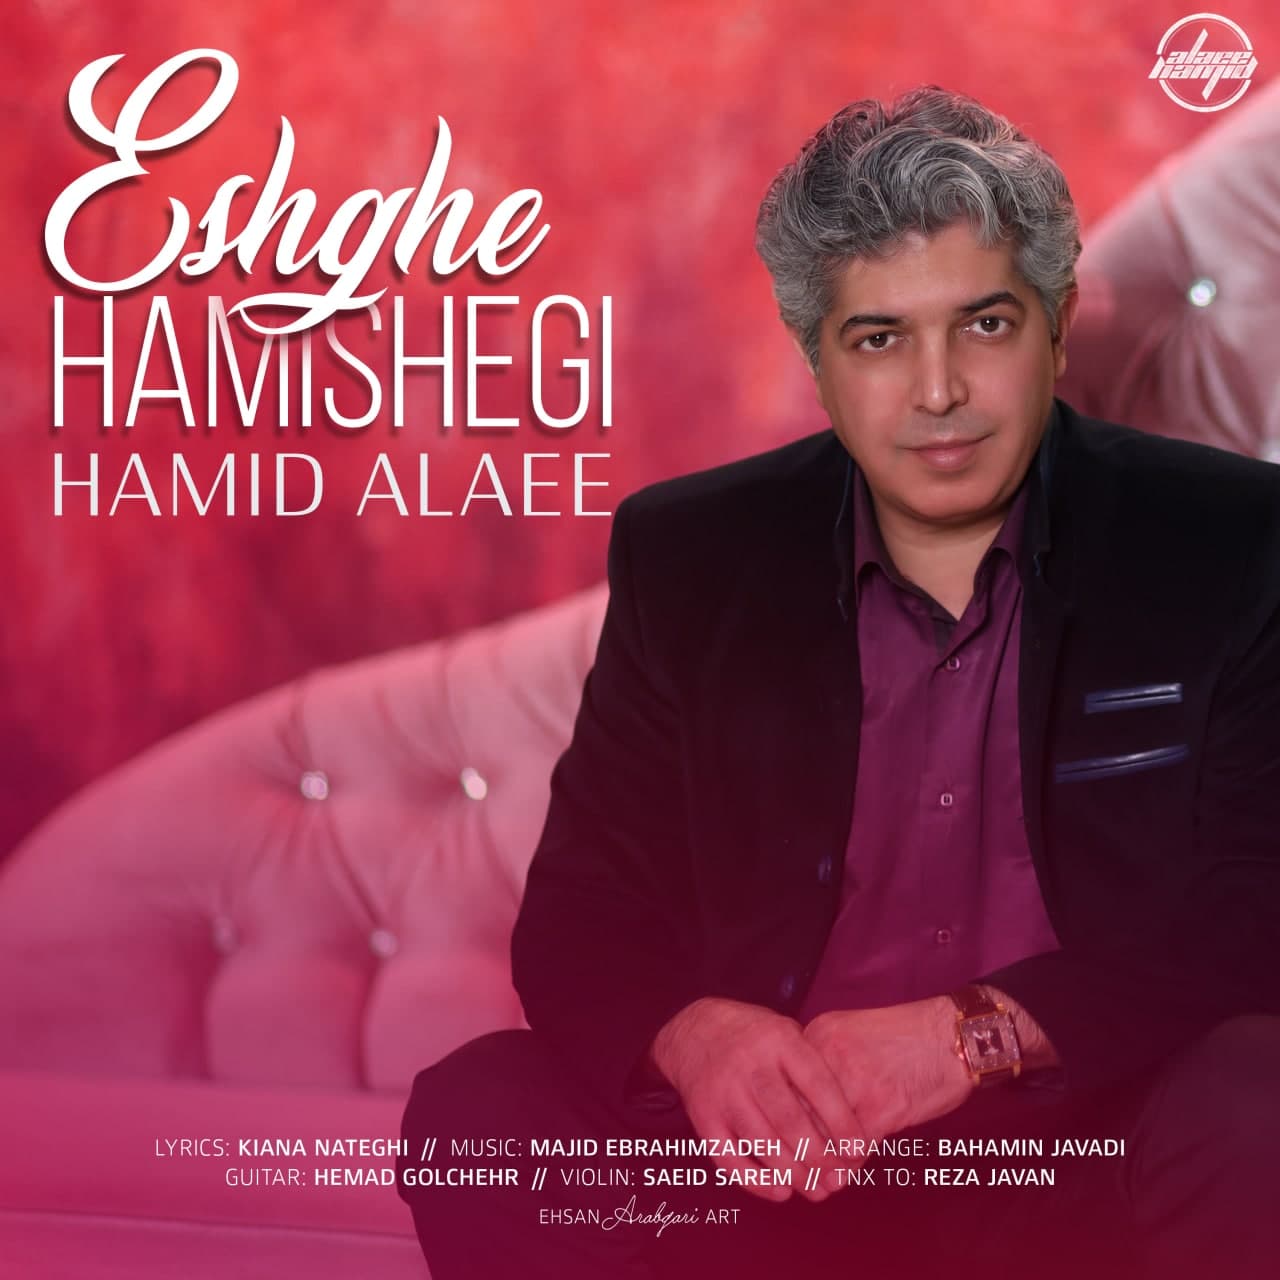 Hamid Alaee – Eshghe Hamishegi